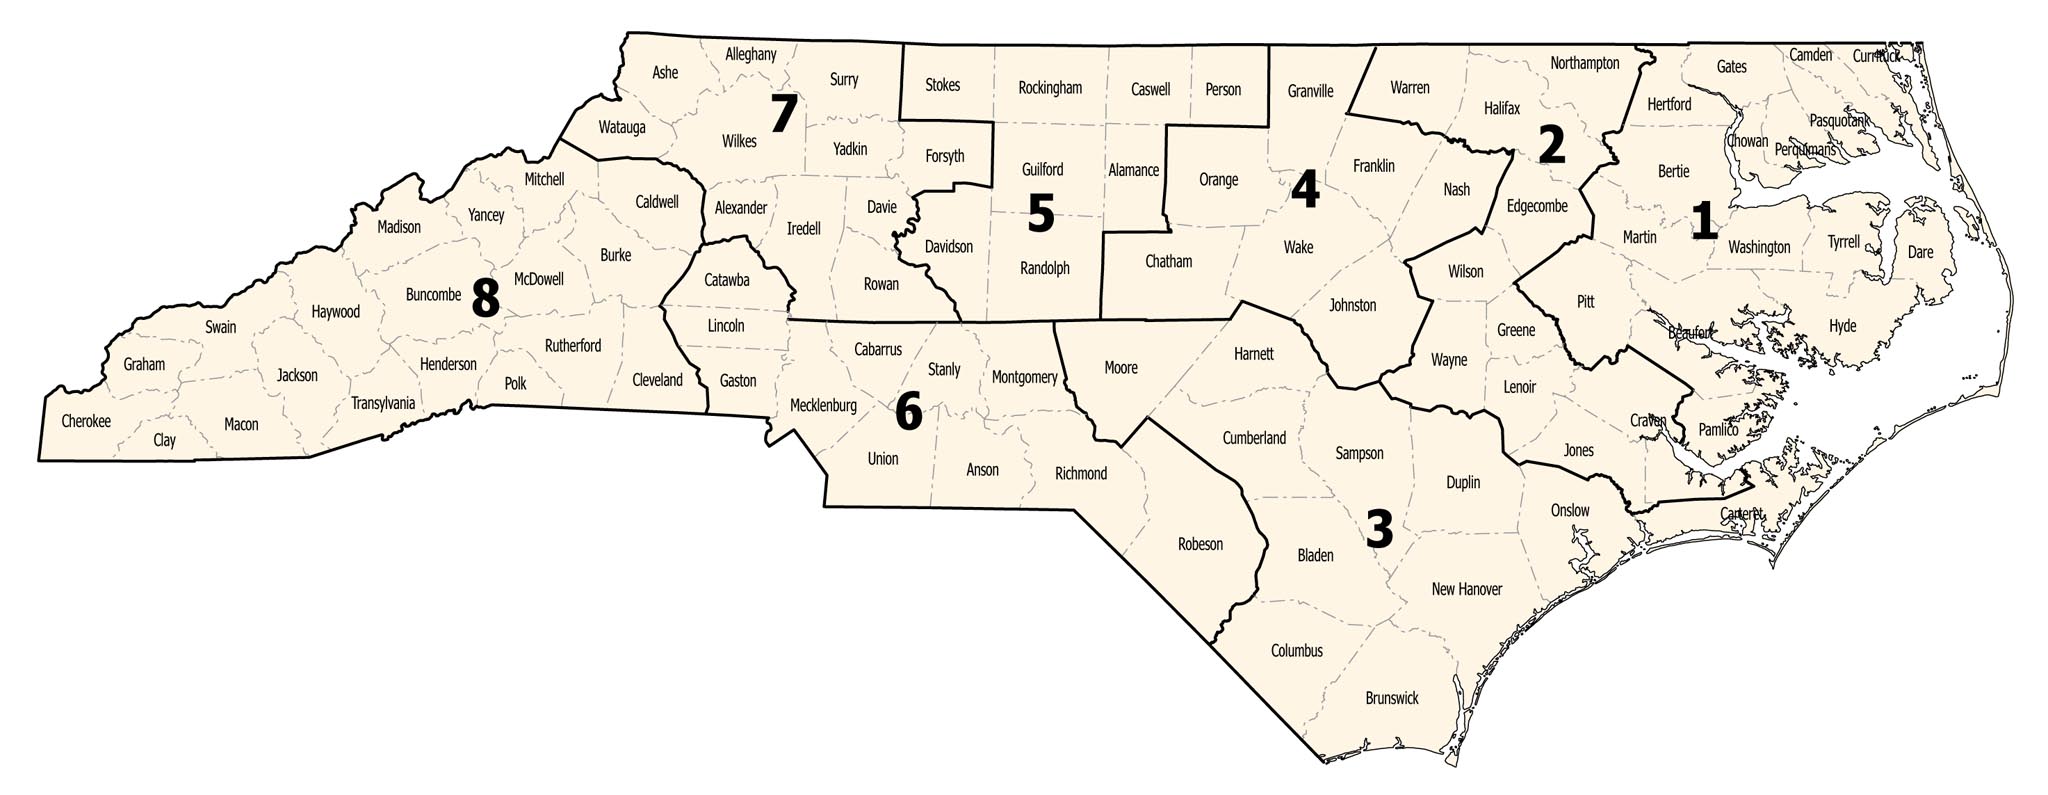 North Carolina congressional districts, 1872-1883